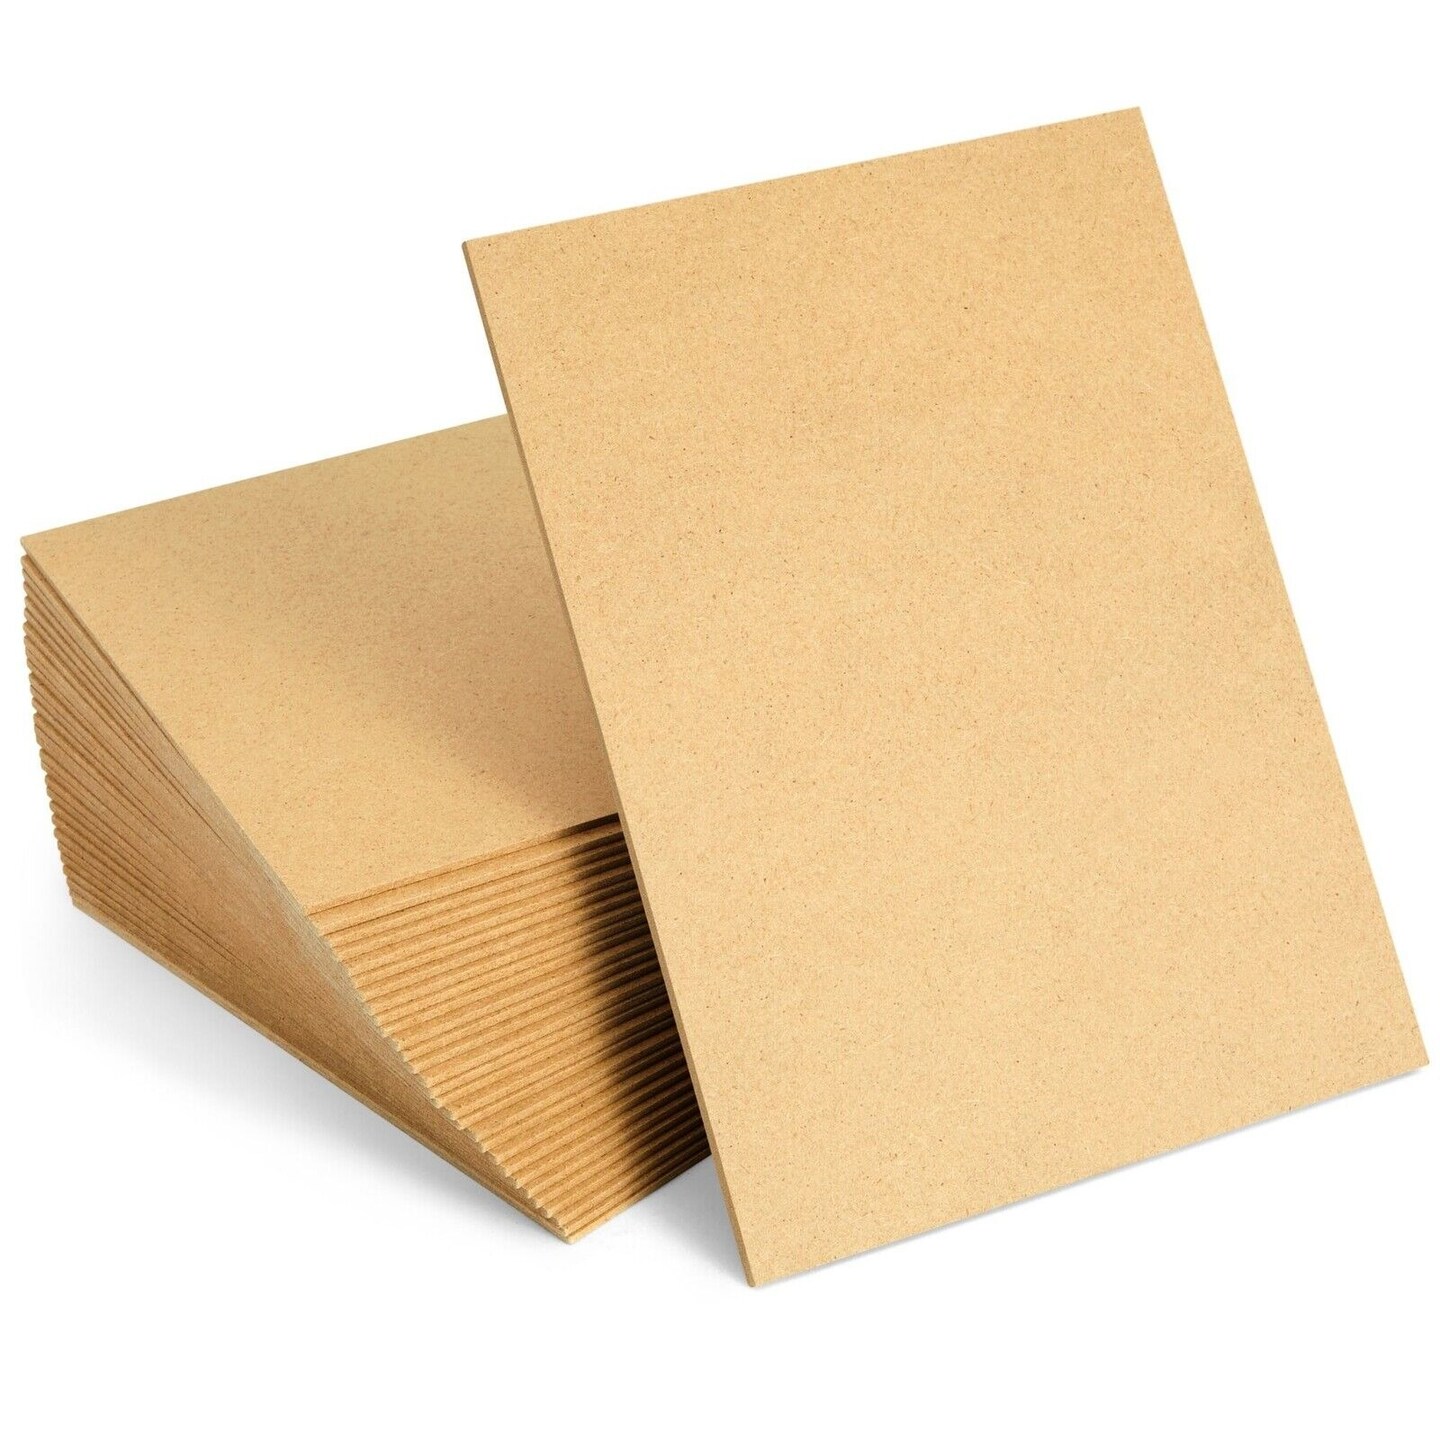 Sheets Thin Wood MDF Boards, Medium Density Fiberboard